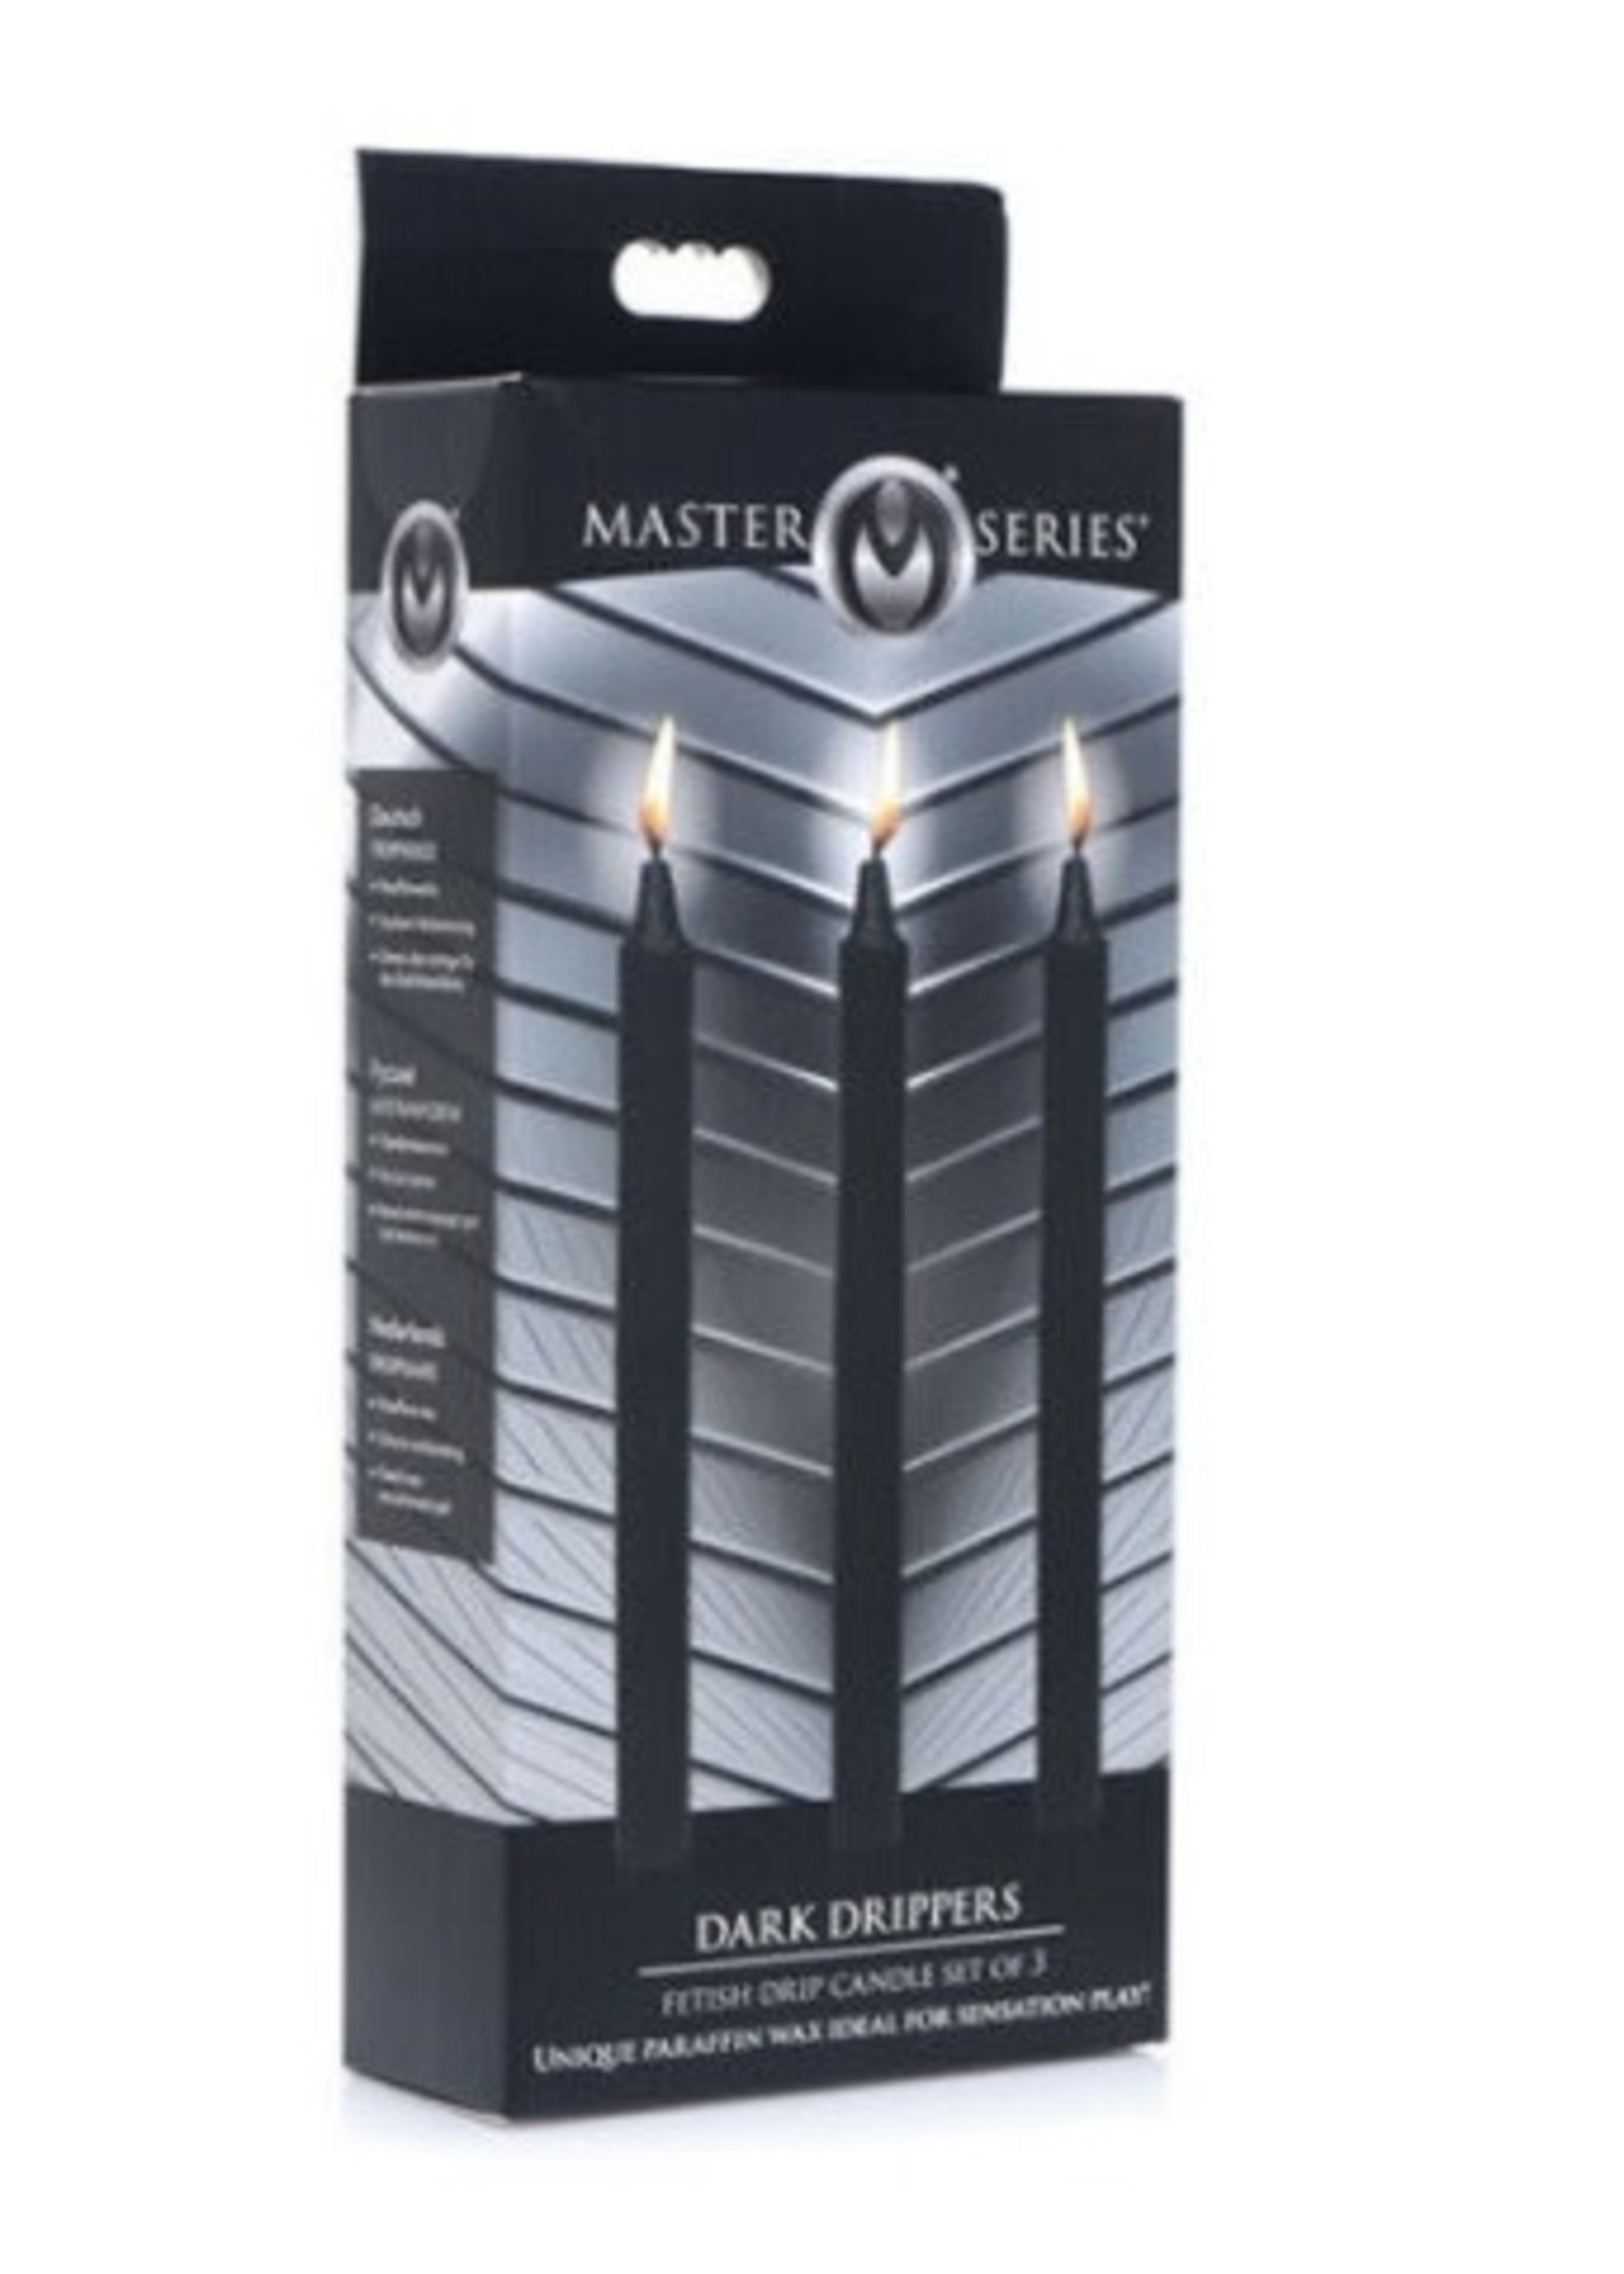 Master Series Dark Drippers Fetish Drip Candles (set of 3) - Black